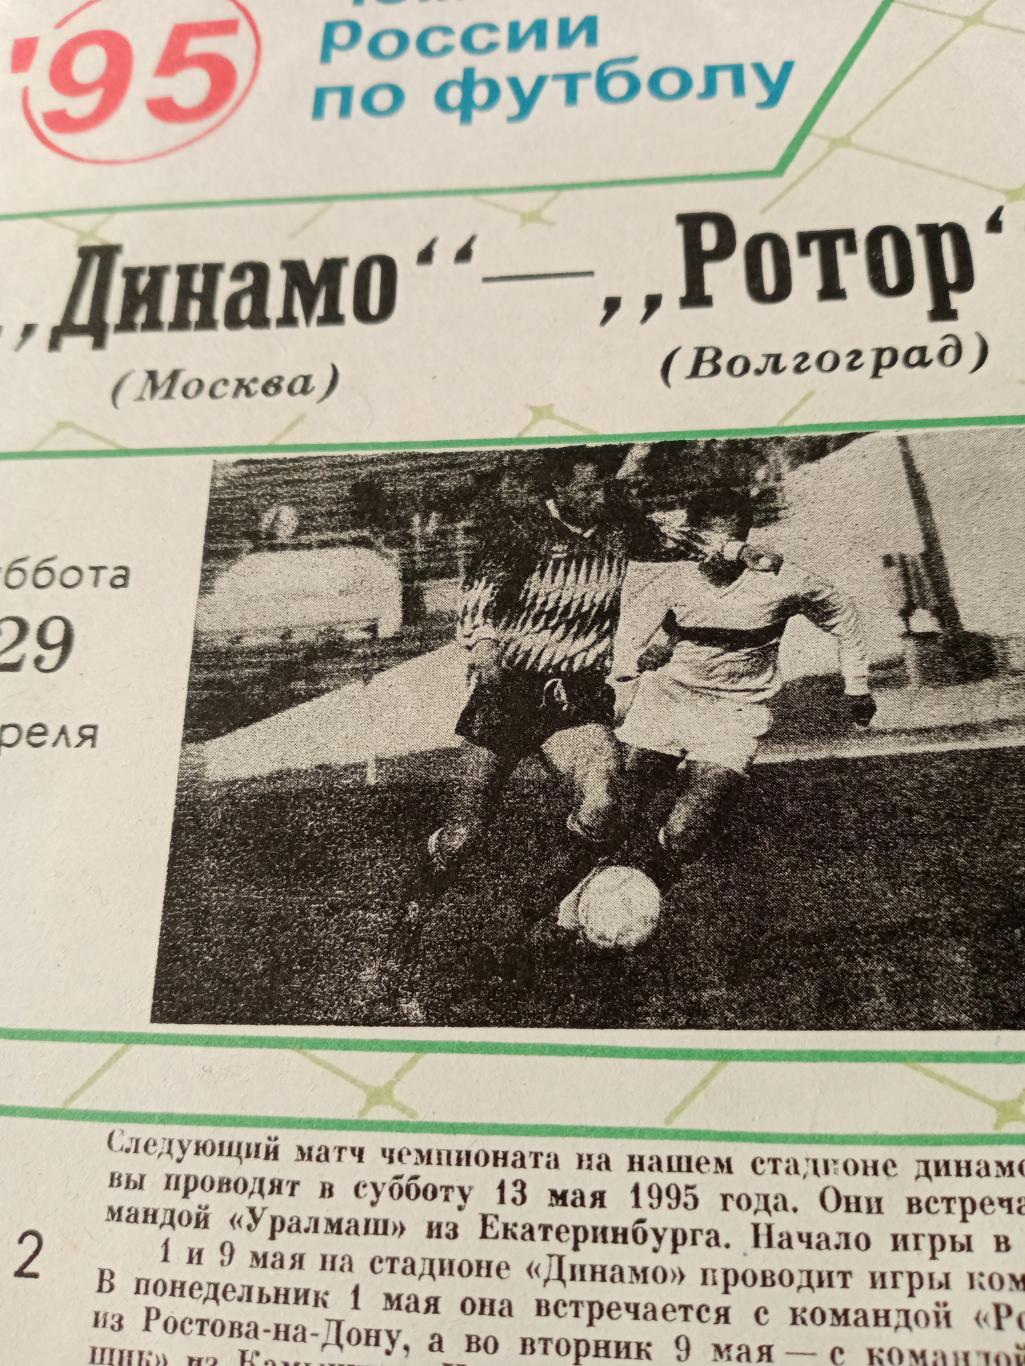 Динамо Москва - Ротор Волгоград. 29 апреля 1995 год